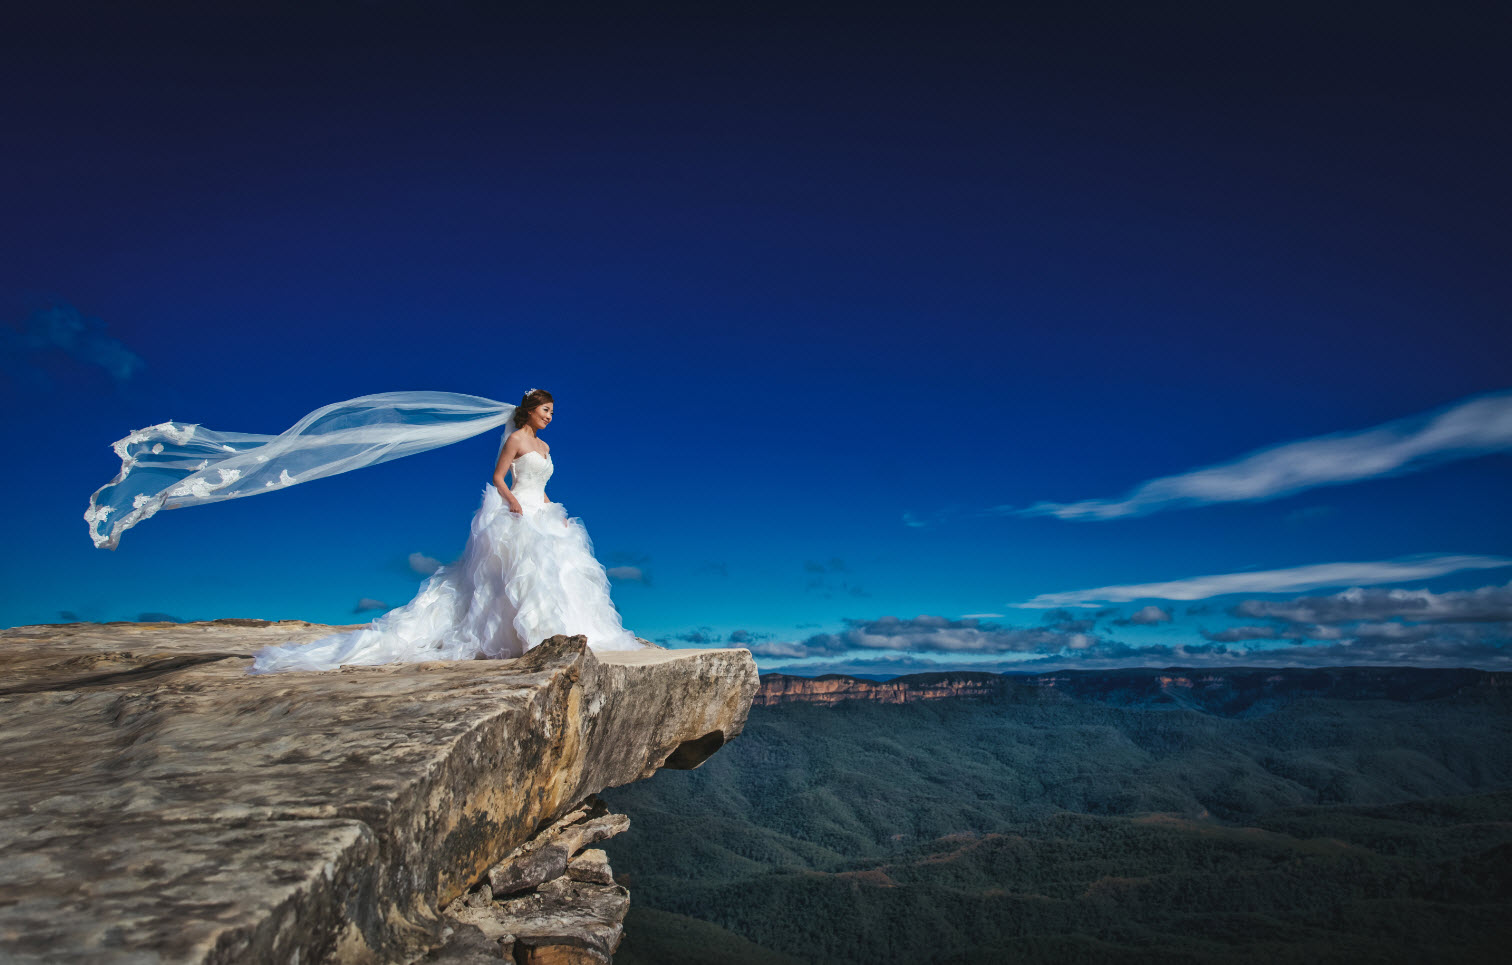 Australia's natural beauty is proving a popular destination for pre-wedding photos.